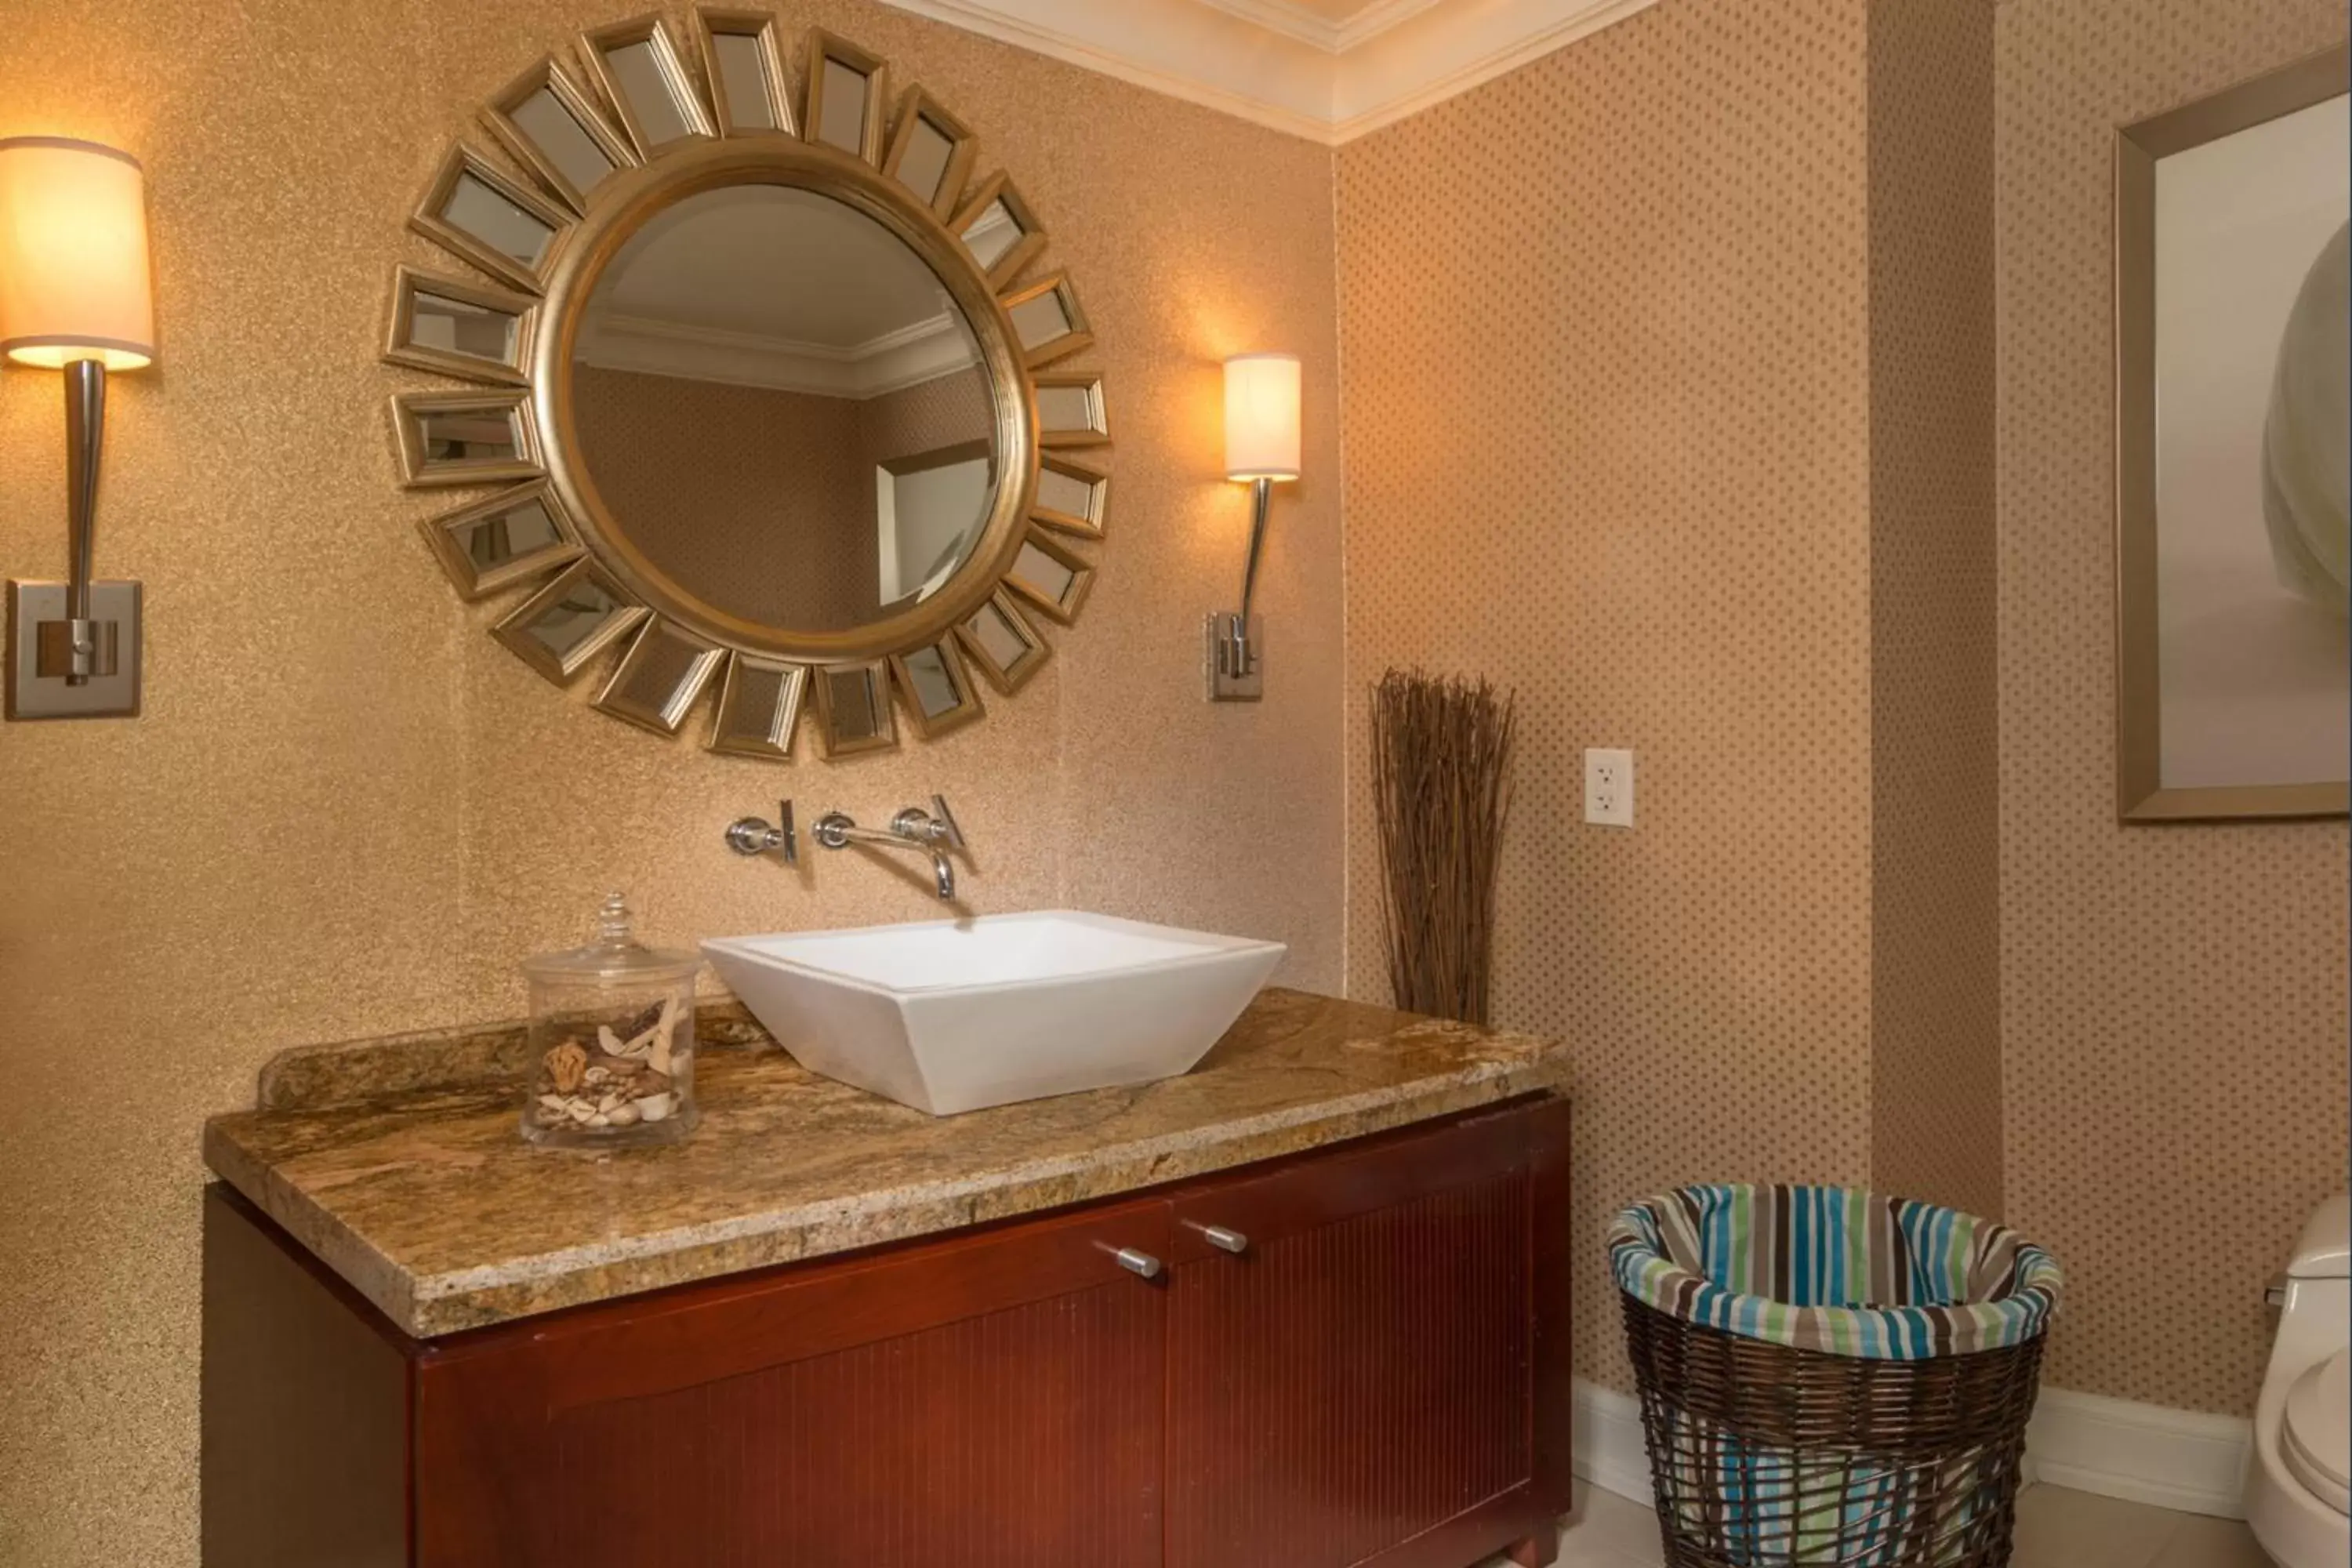 Photo of the whole room, Bathroom in JW Marriott Washington, DC